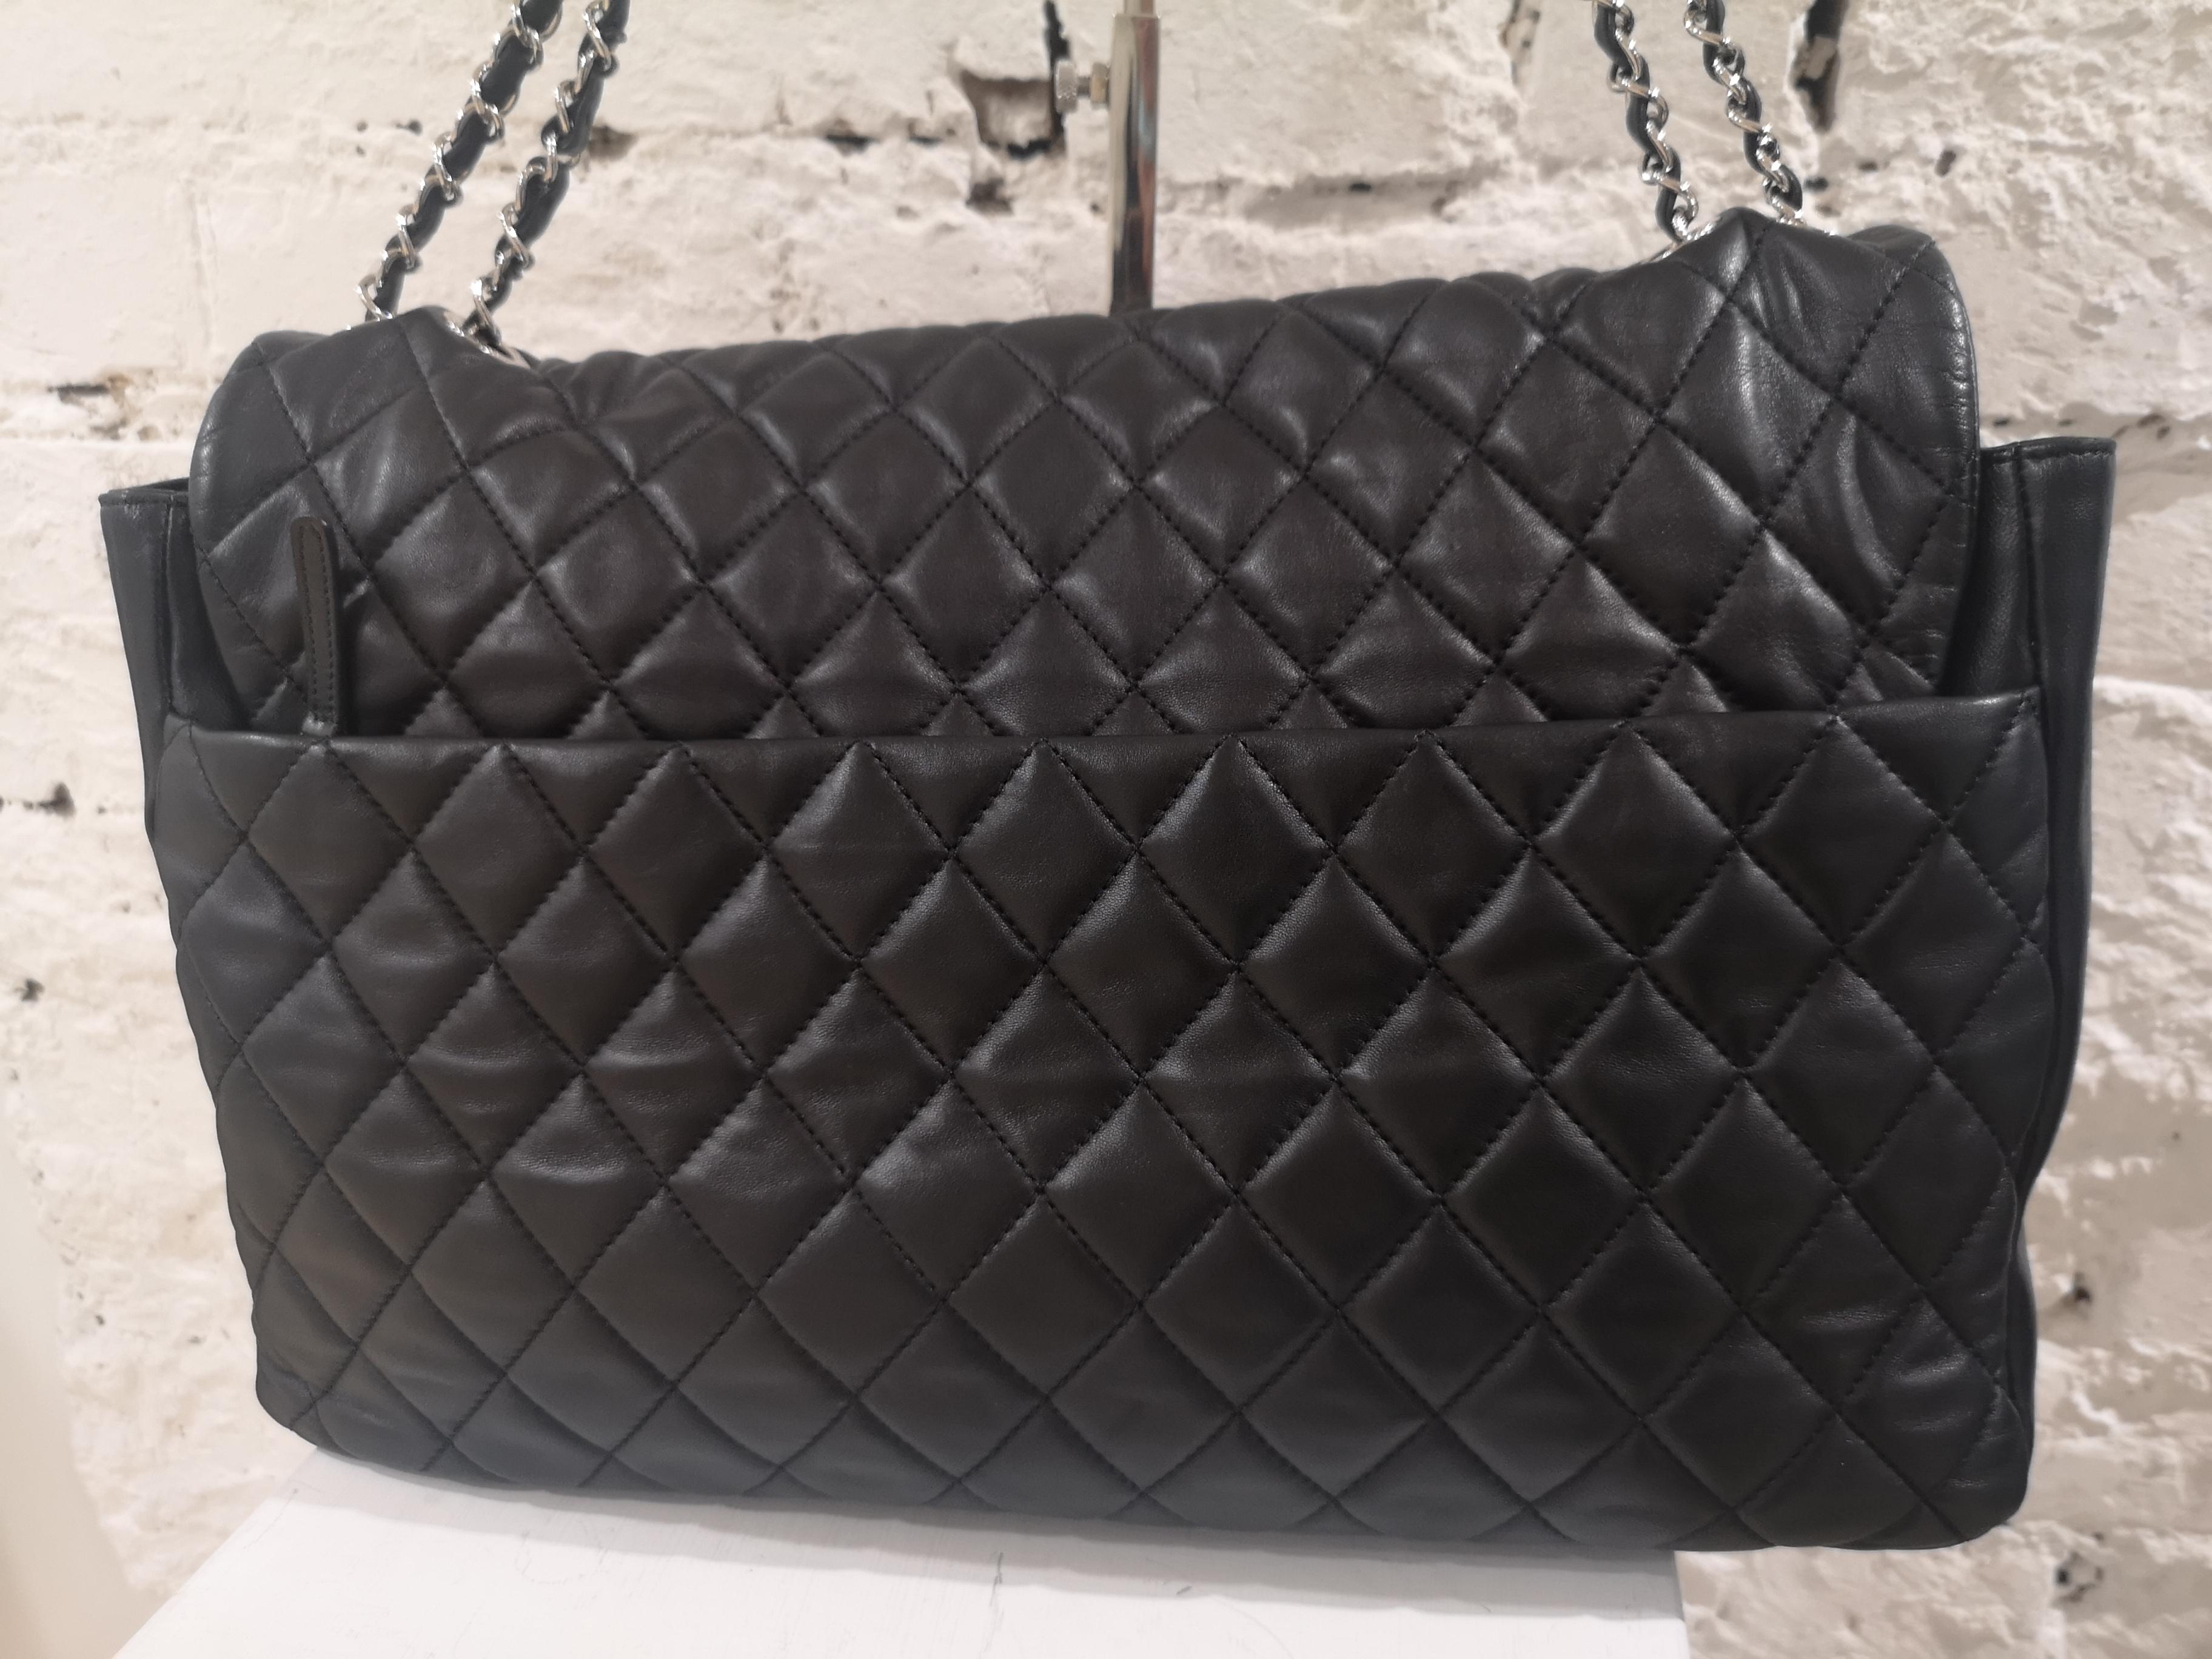 Chanel maxi jumbo black leather shoulder bag 4